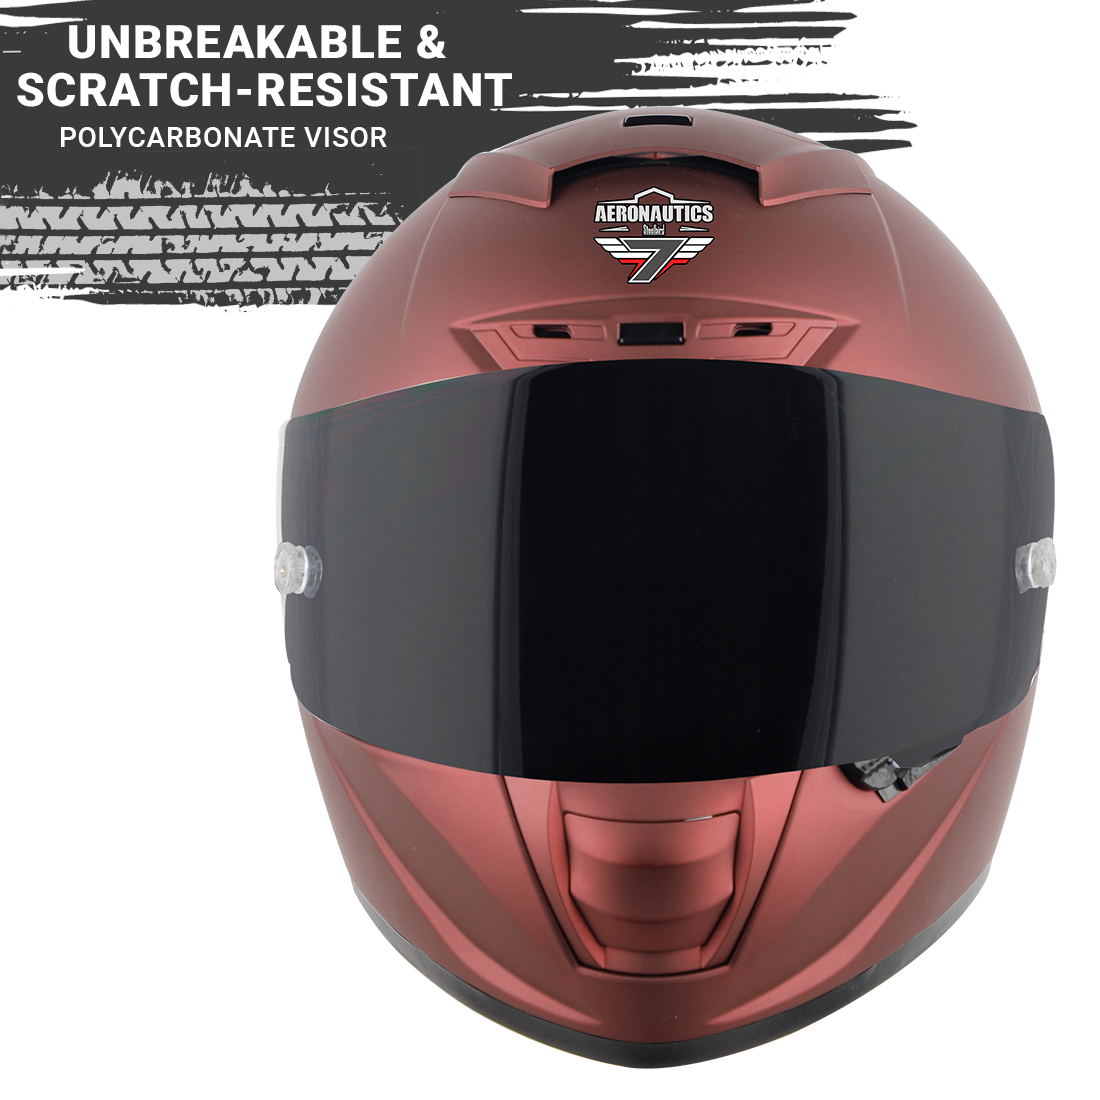 Steelbird SA-5 7Wings Aeronautics Full Face DOT Certified Helmet (Matt Maroon Fitted With Clear Visor And Extra Anti Fog Smoke Visor)